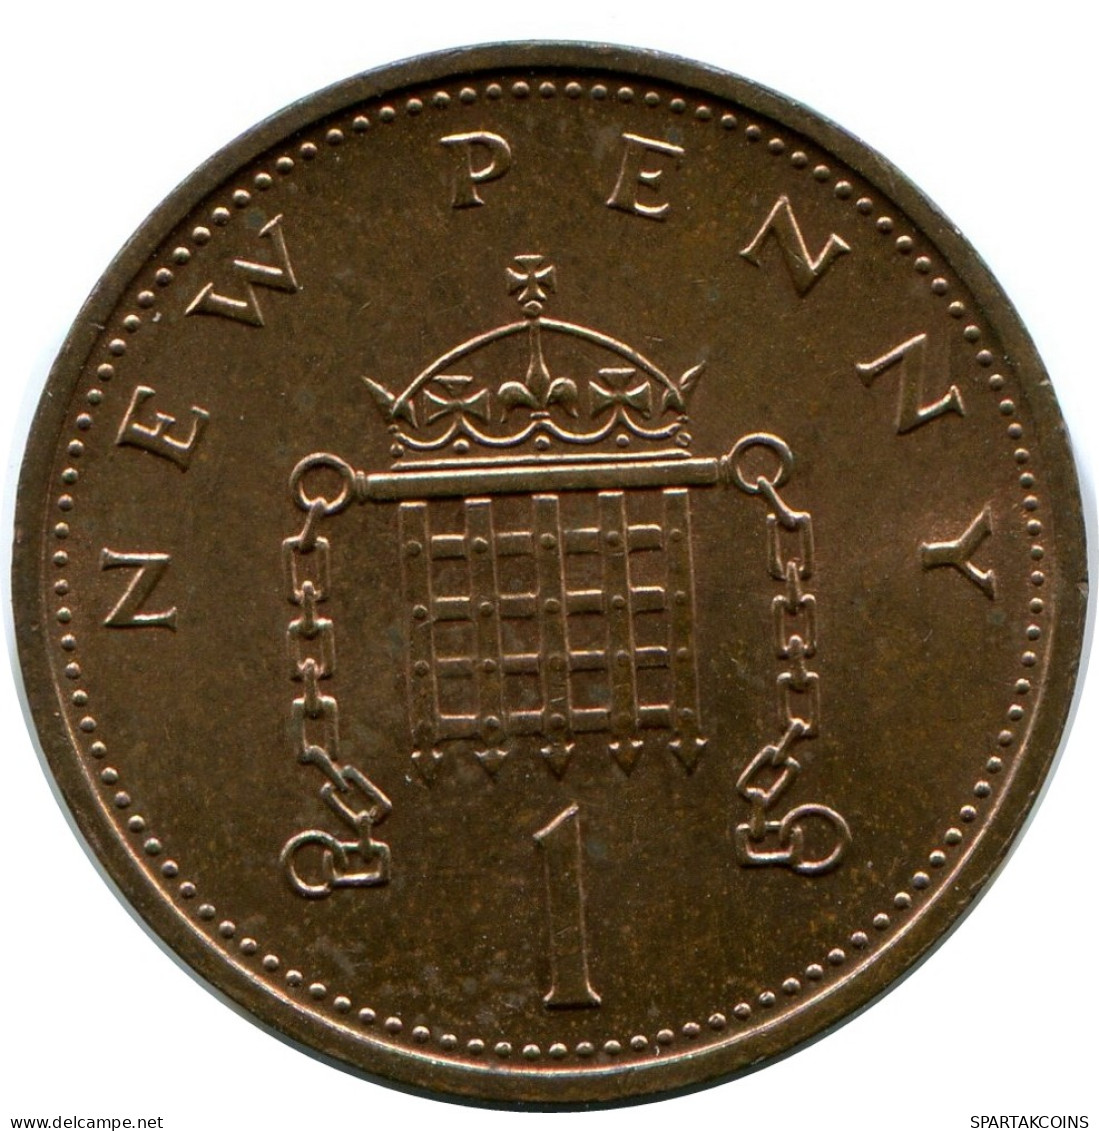 NEW PENNY 1971 UK GREAT BRITAIN Coin #AZ036.U - 1 Penny & 1 New Penny